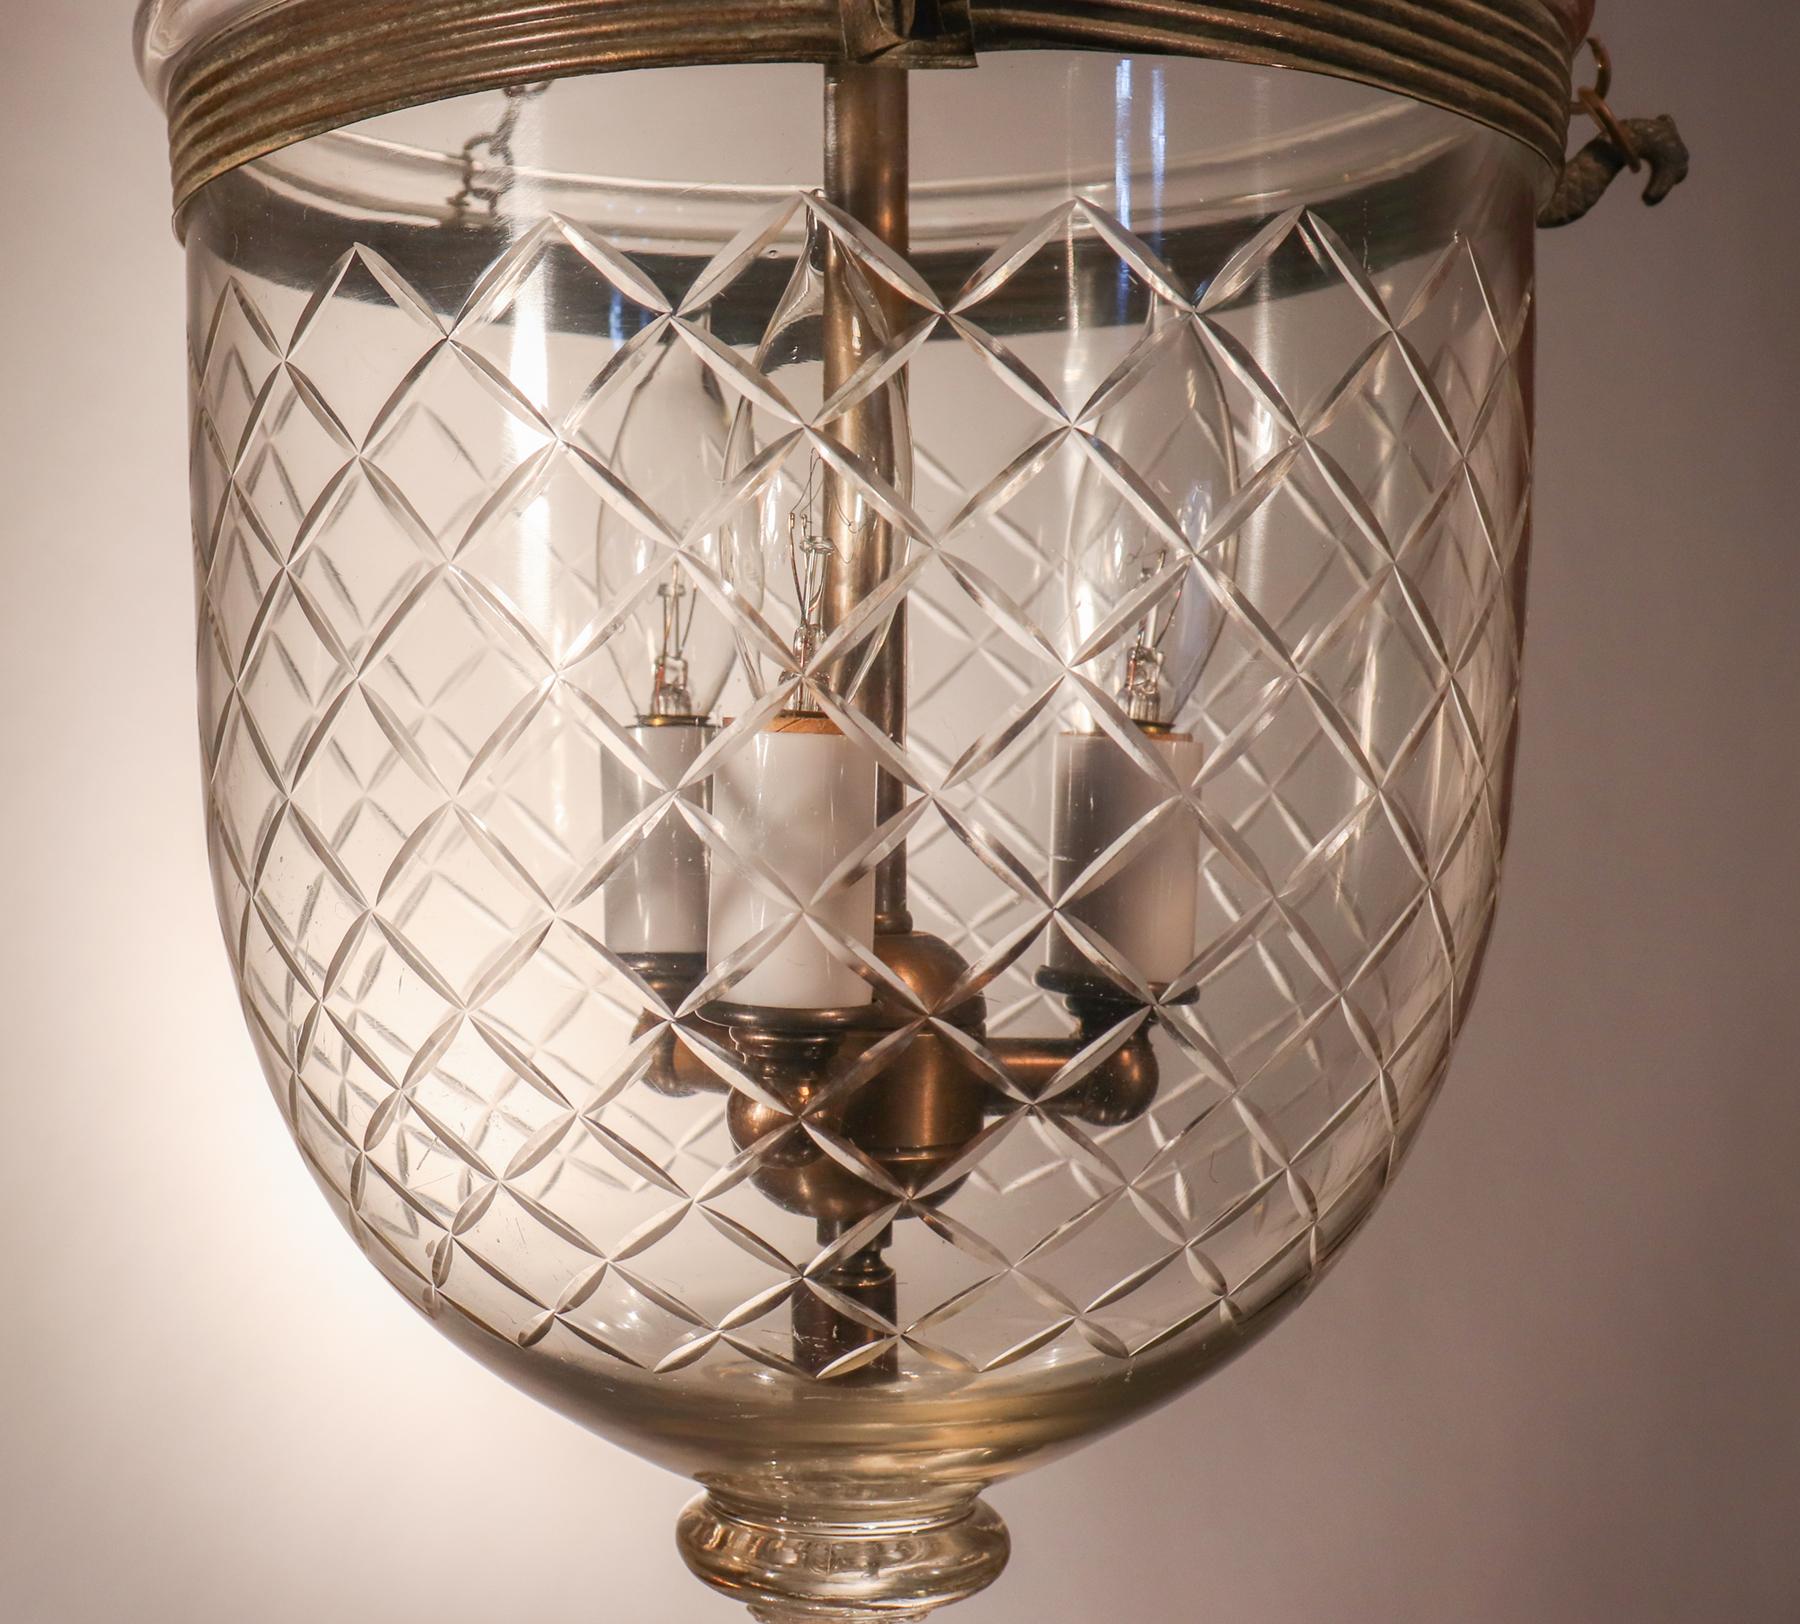 English Antique Petite Bell Jar Lantern with Diamond Etching